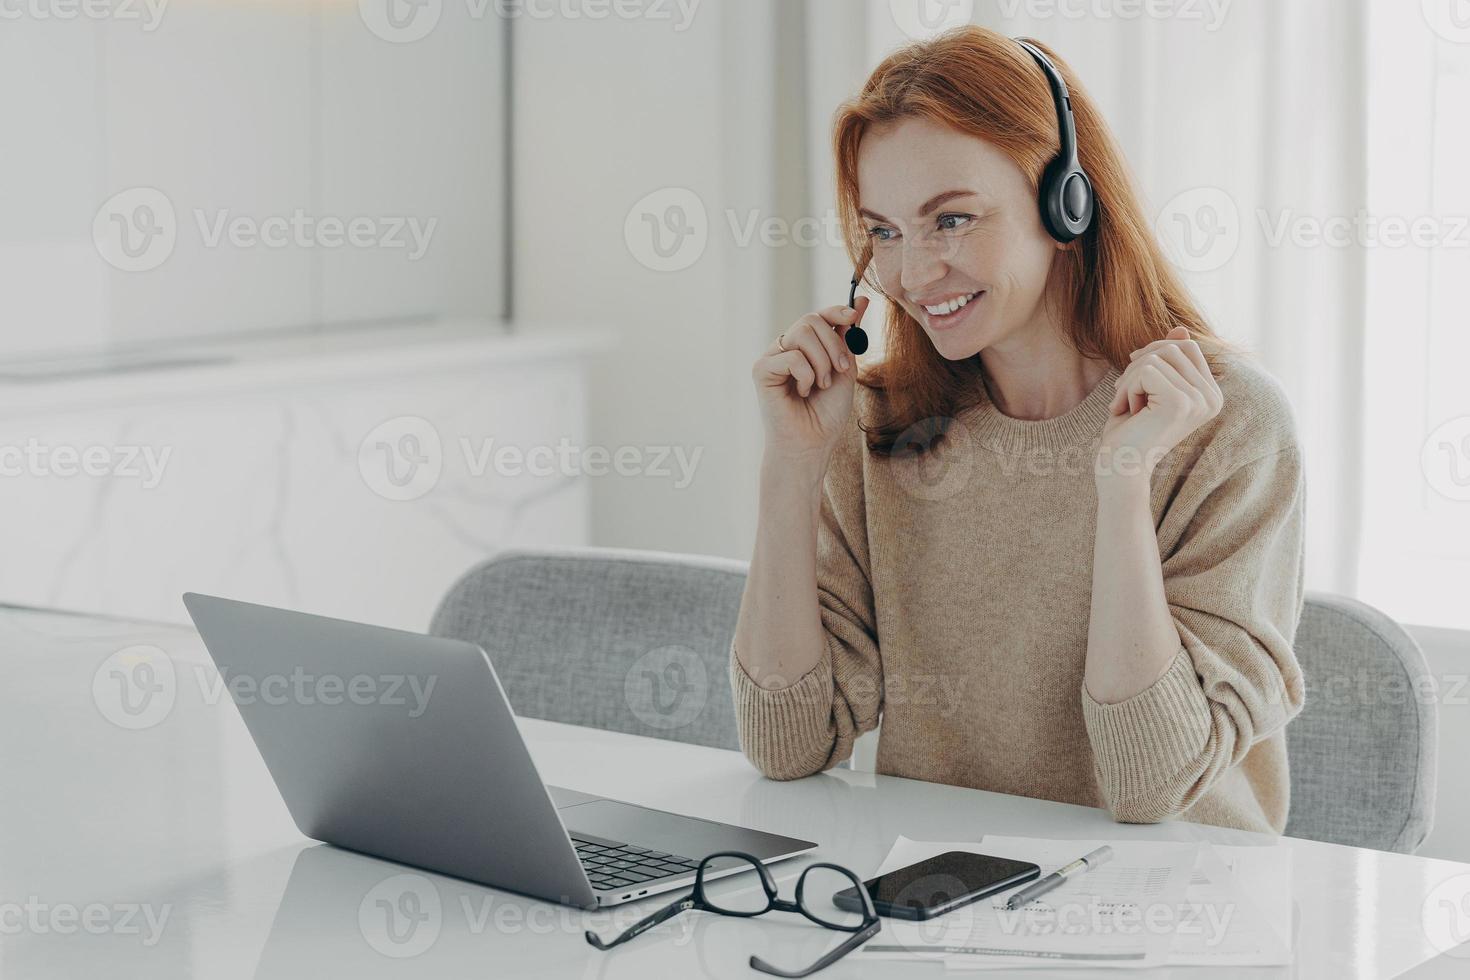 aangename lachende roodharige vrouw in headset die communiceert met collega's tijdens videogesprek op laptop foto